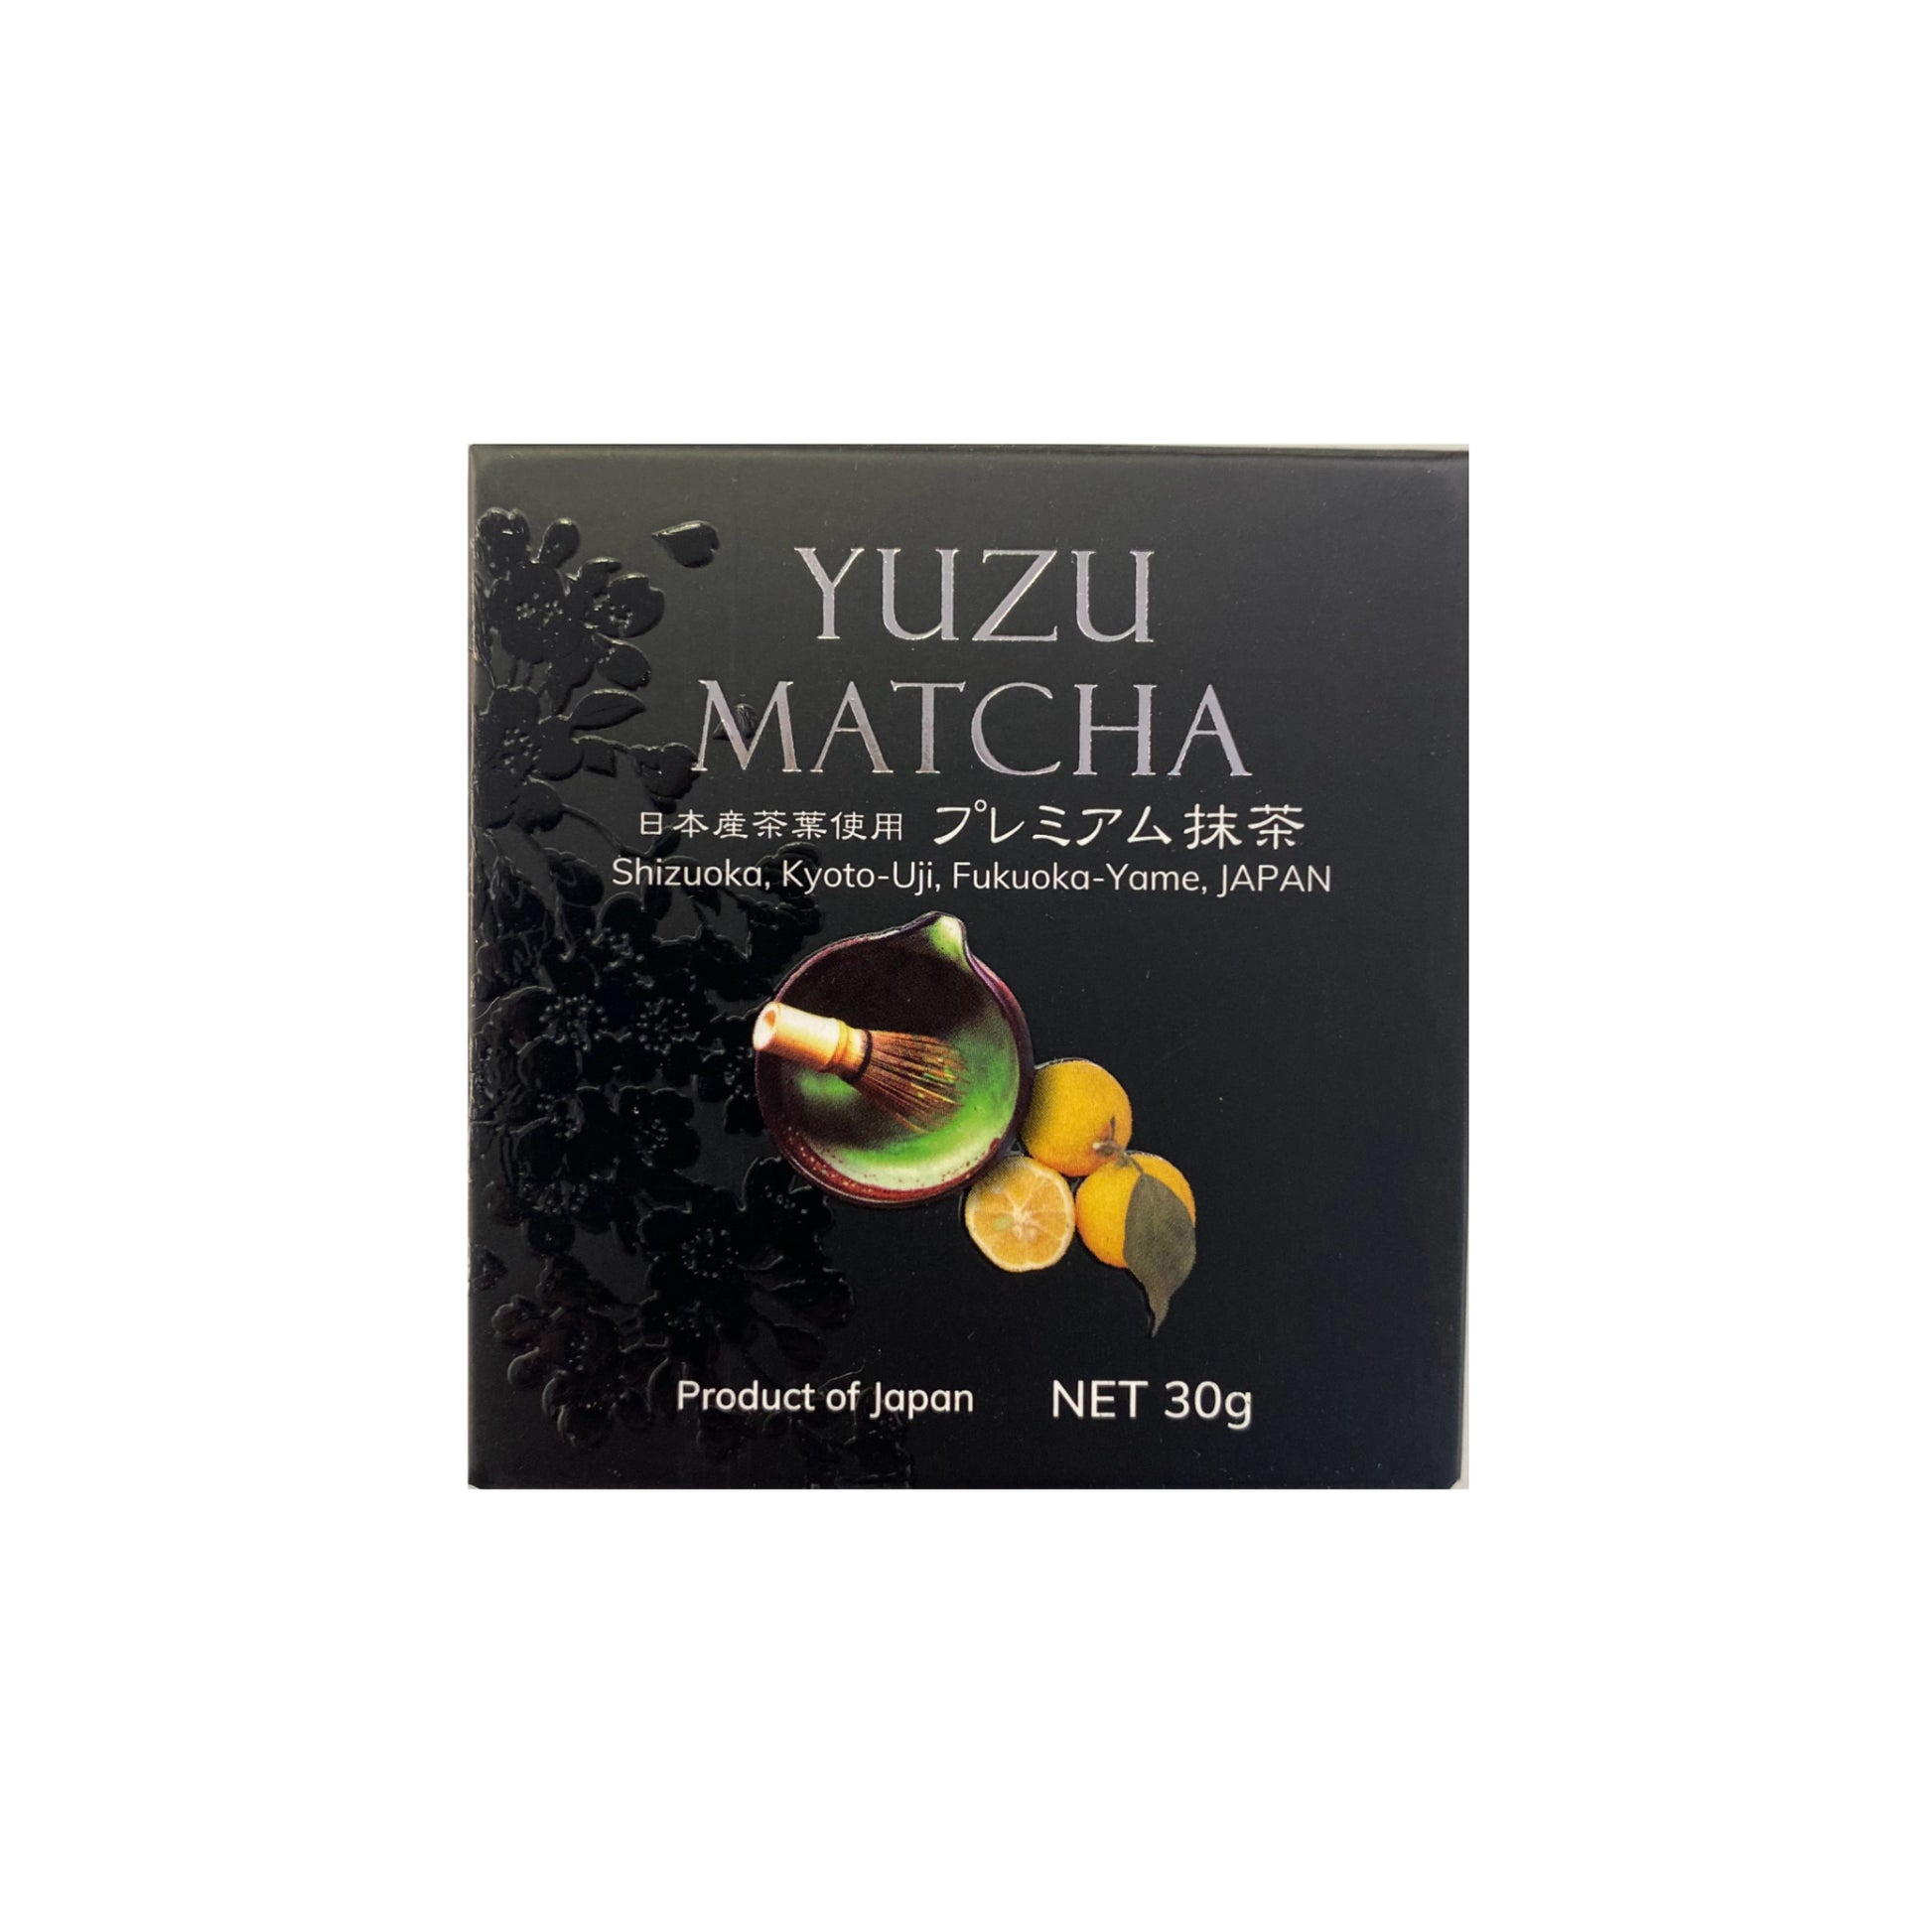 Premium single origin Uji matcha blended with yuzu from Kochi, Japan